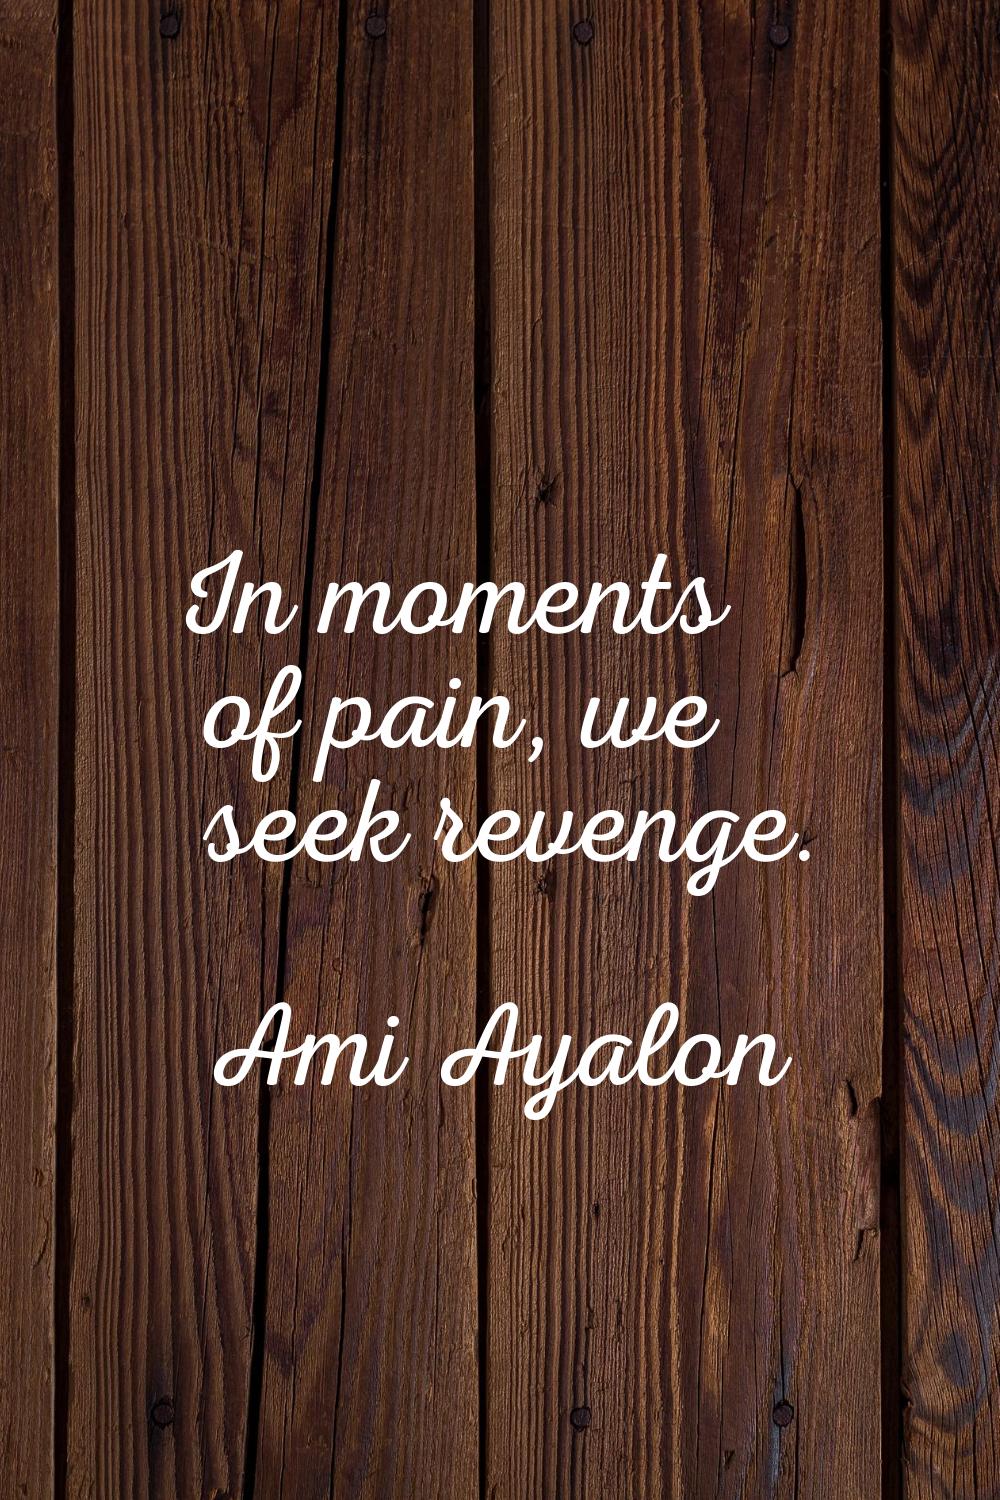 In moments of pain, we seek revenge.